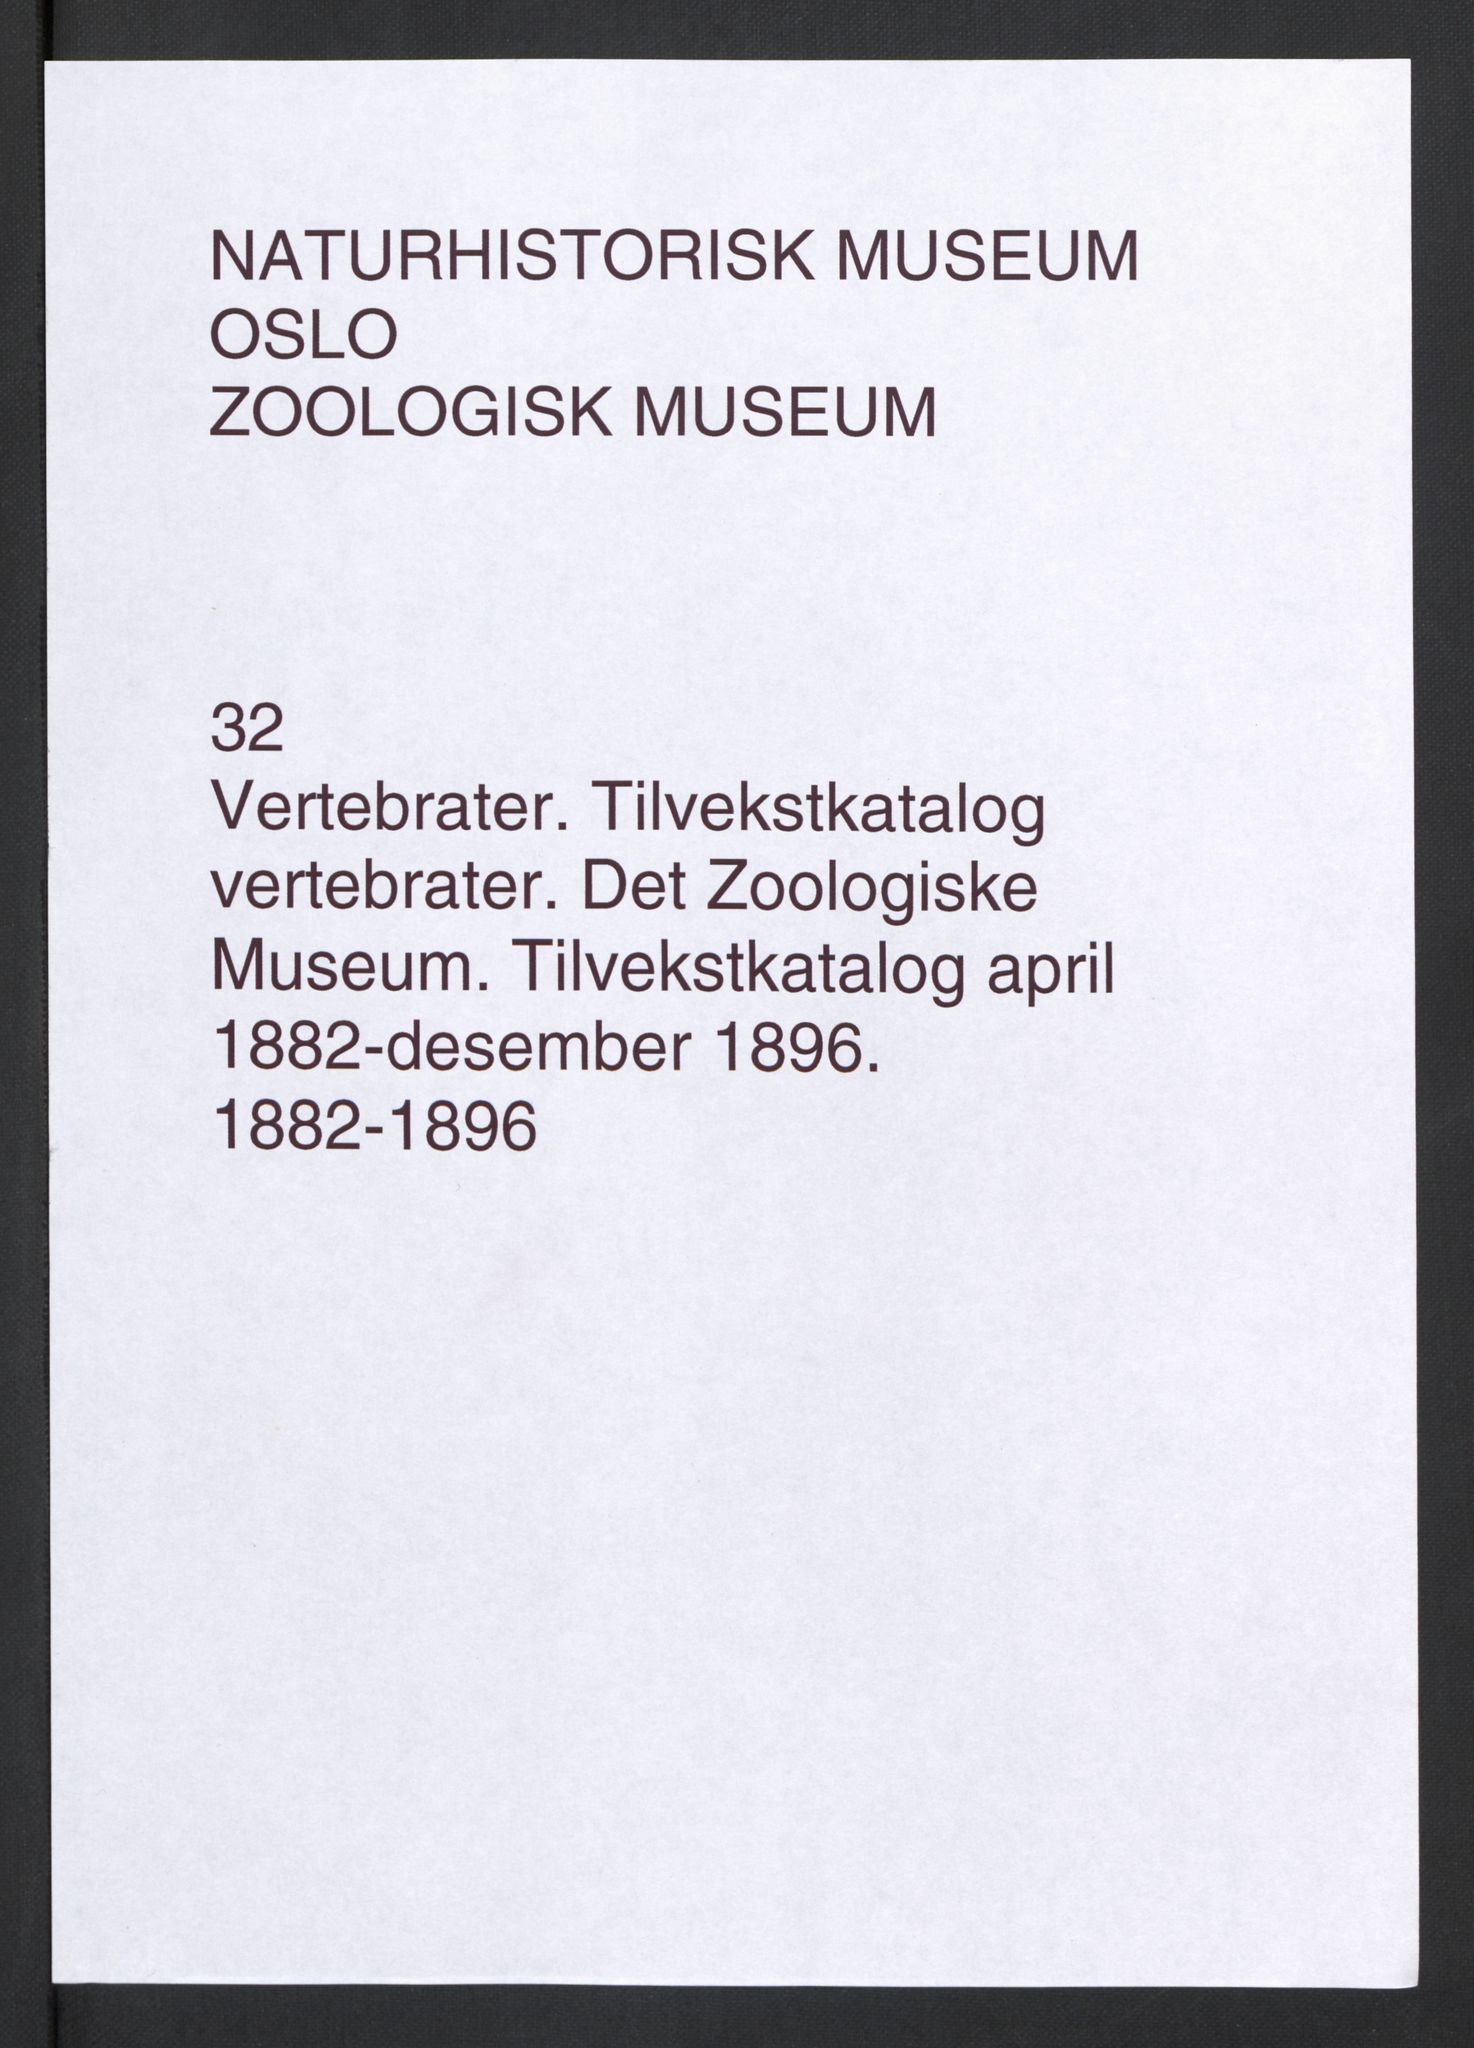 Naturhistorisk museum (Oslo), NHMO/-/5, 1882-1896